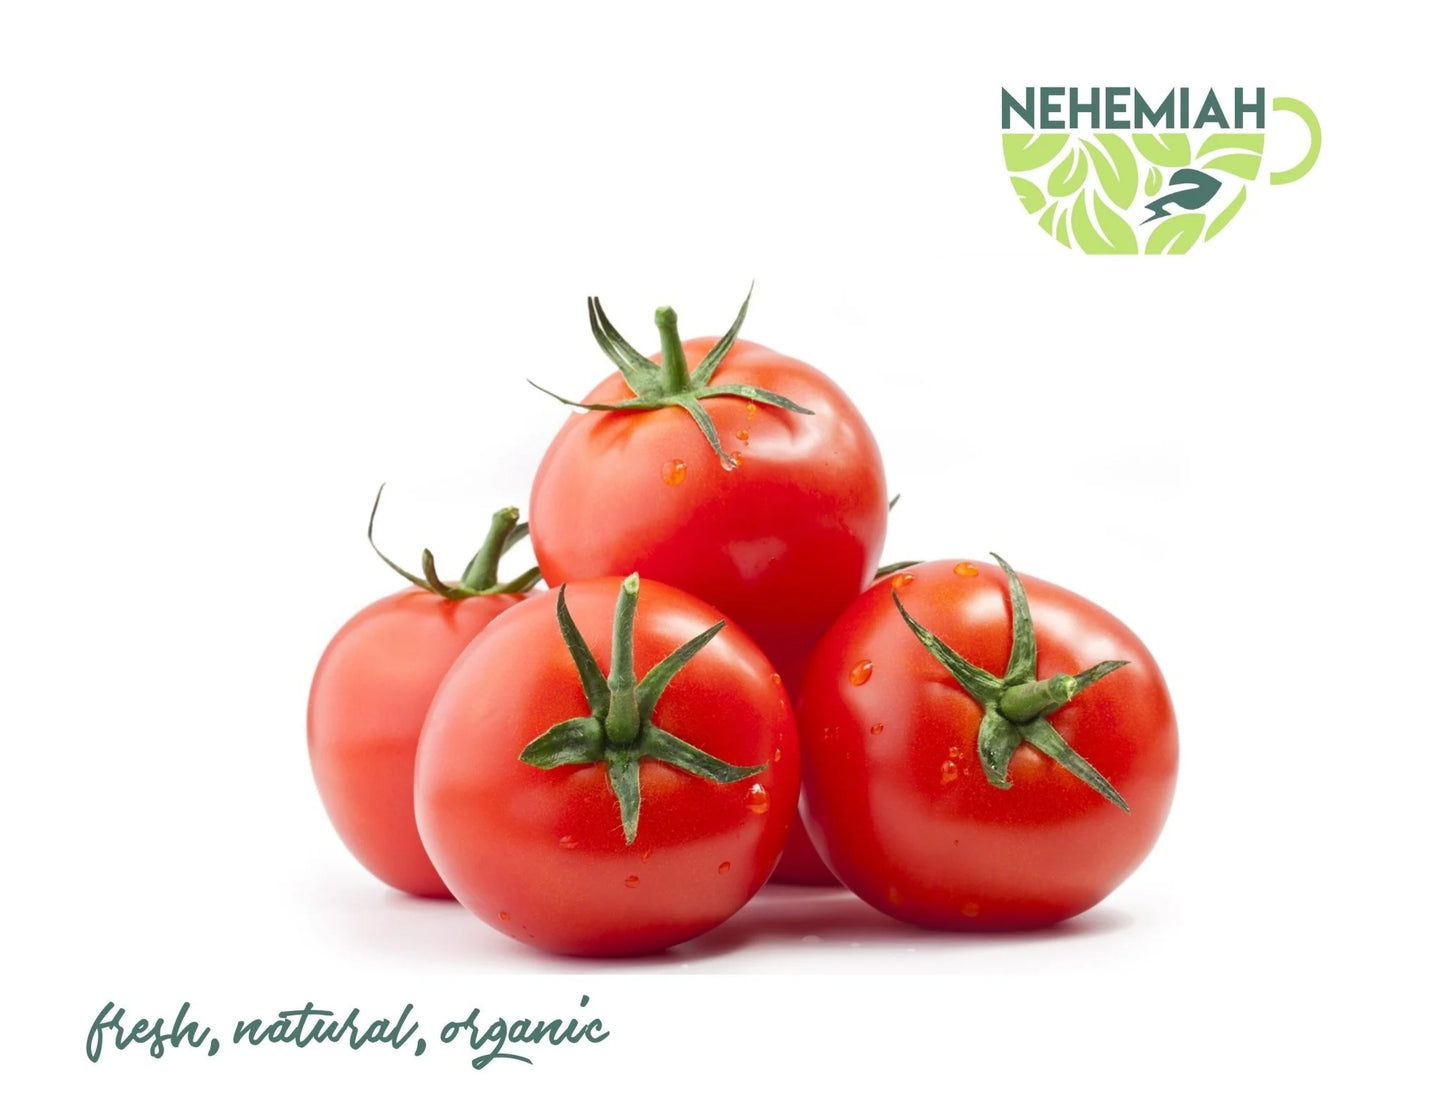 Nehemiah Superfood Tomatoes